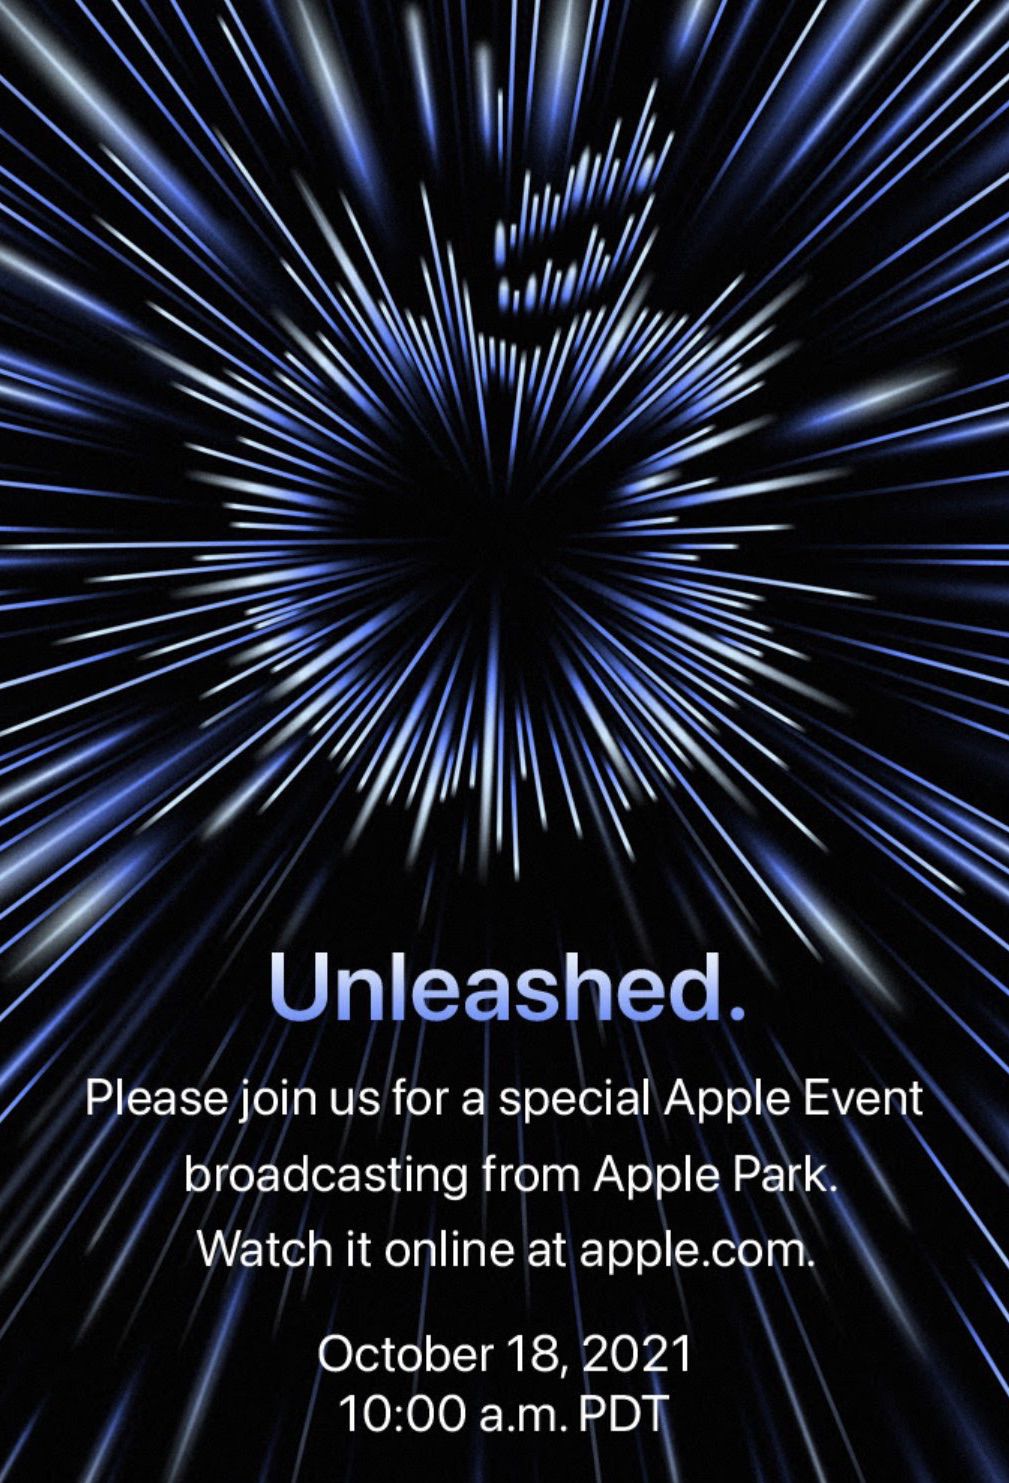 apple-event-unleashed.jpg